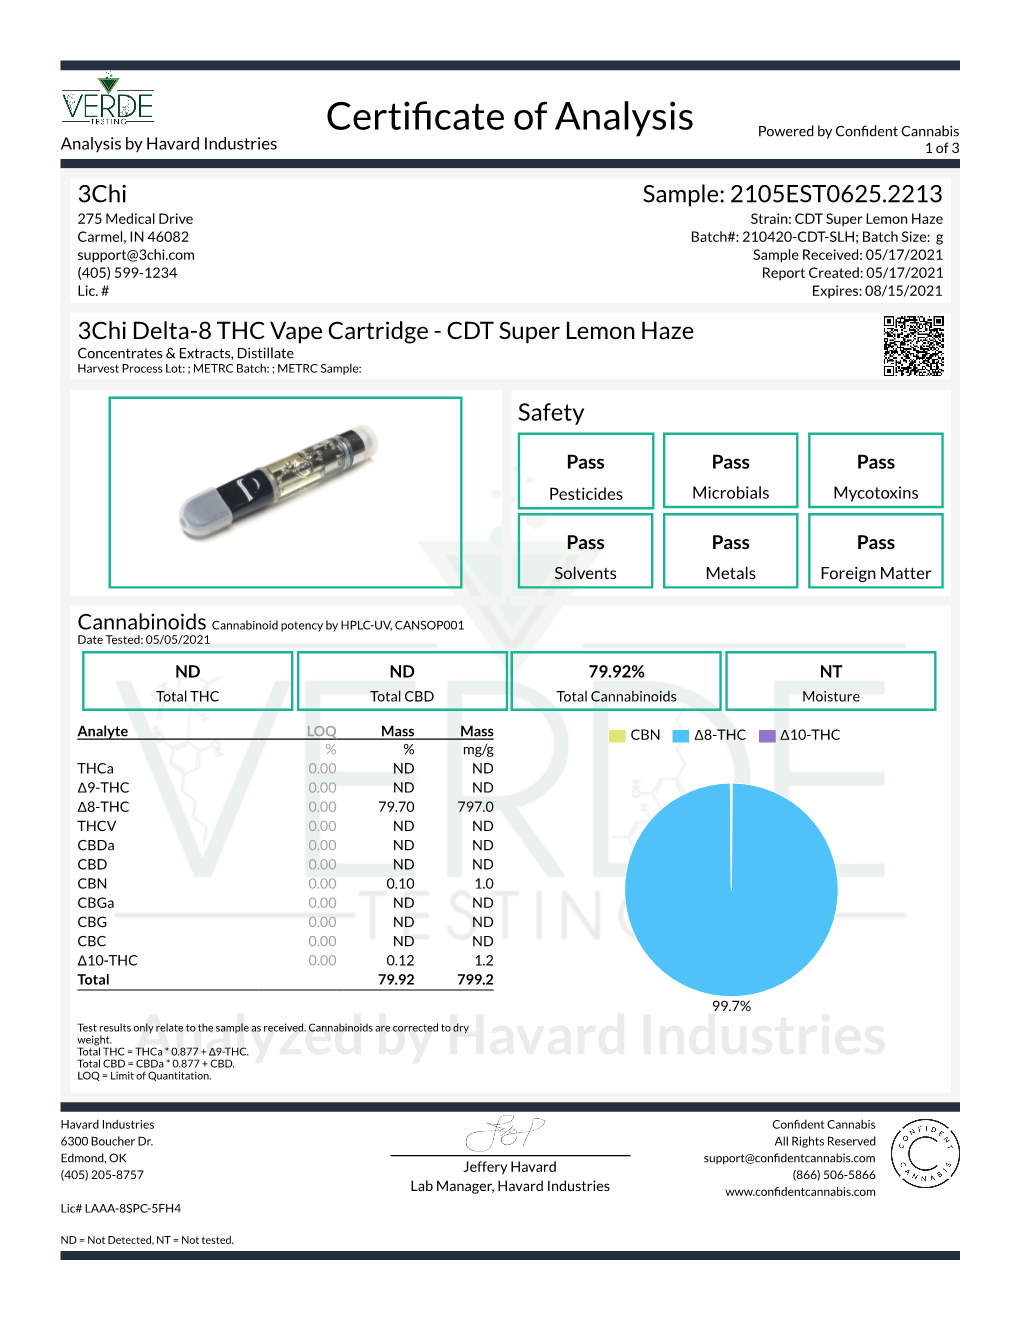 3Chi Delta 8 THC Vape Cartridge